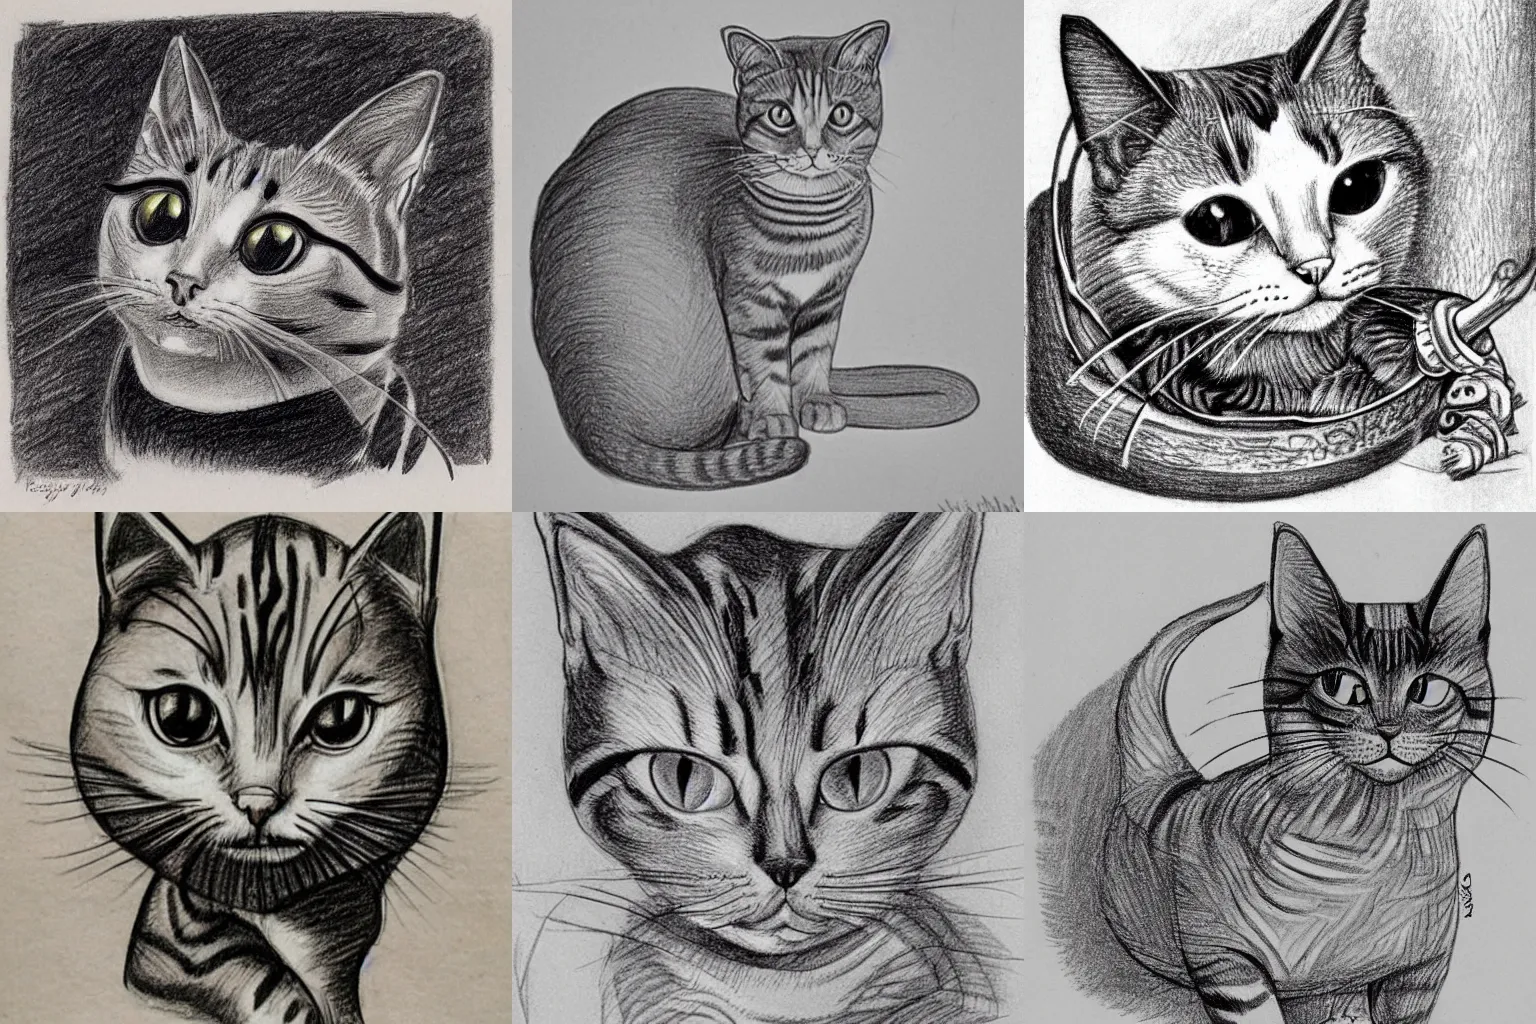 Prompt: MC Escher drawing of a cute cat in color